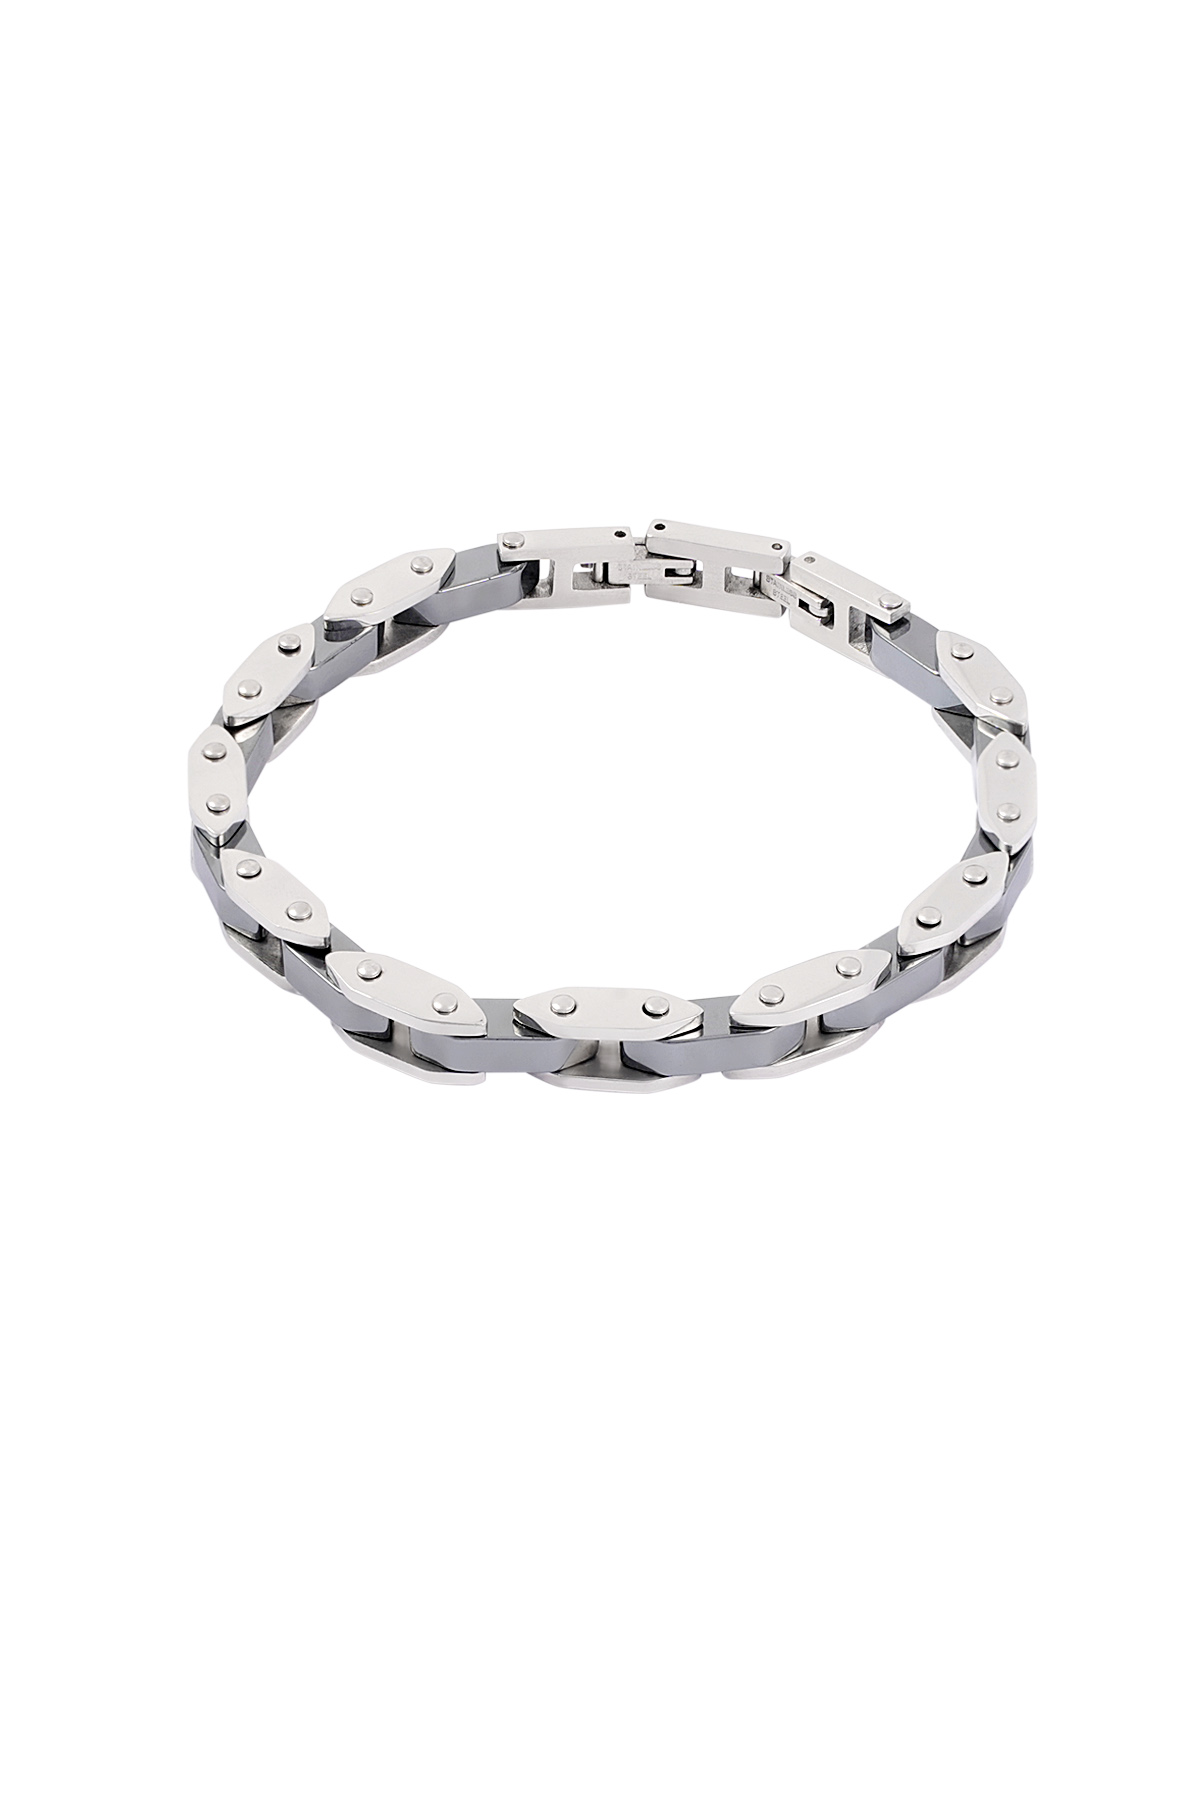 Double chained men's bracelet - silver